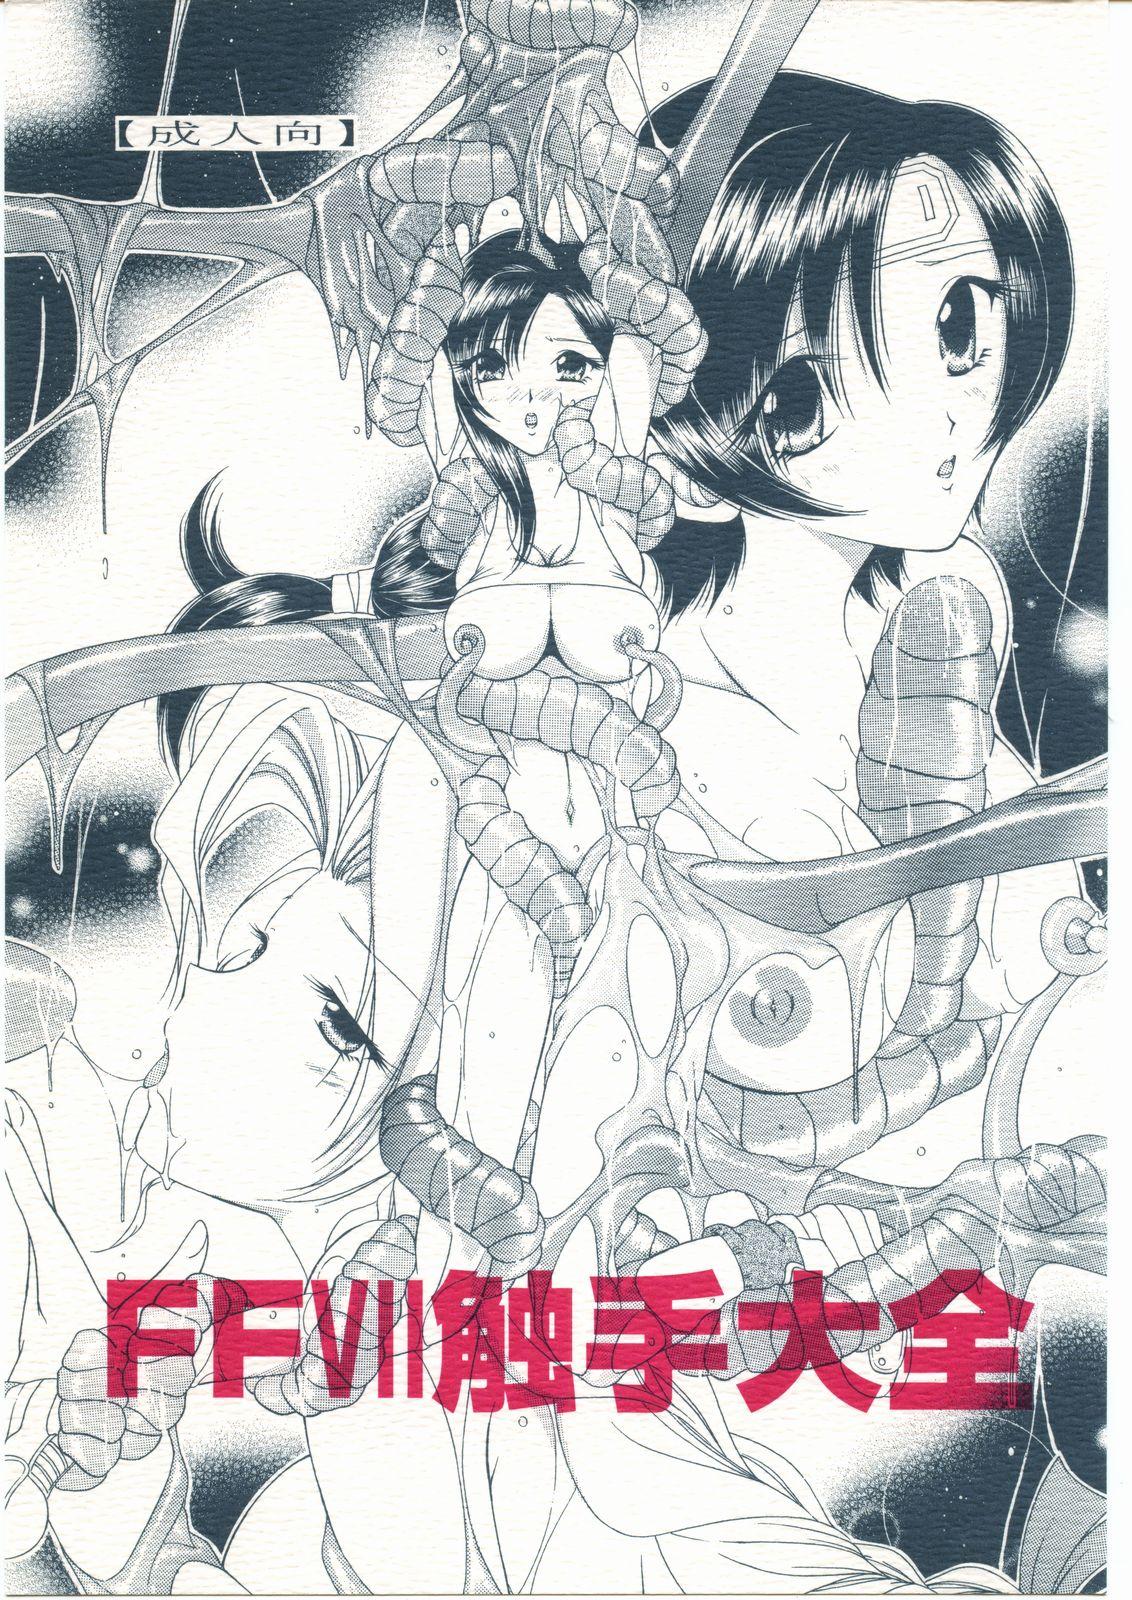 Funny FFVII Shokushu Taizen - Final fantasy vii Relax - Page 1